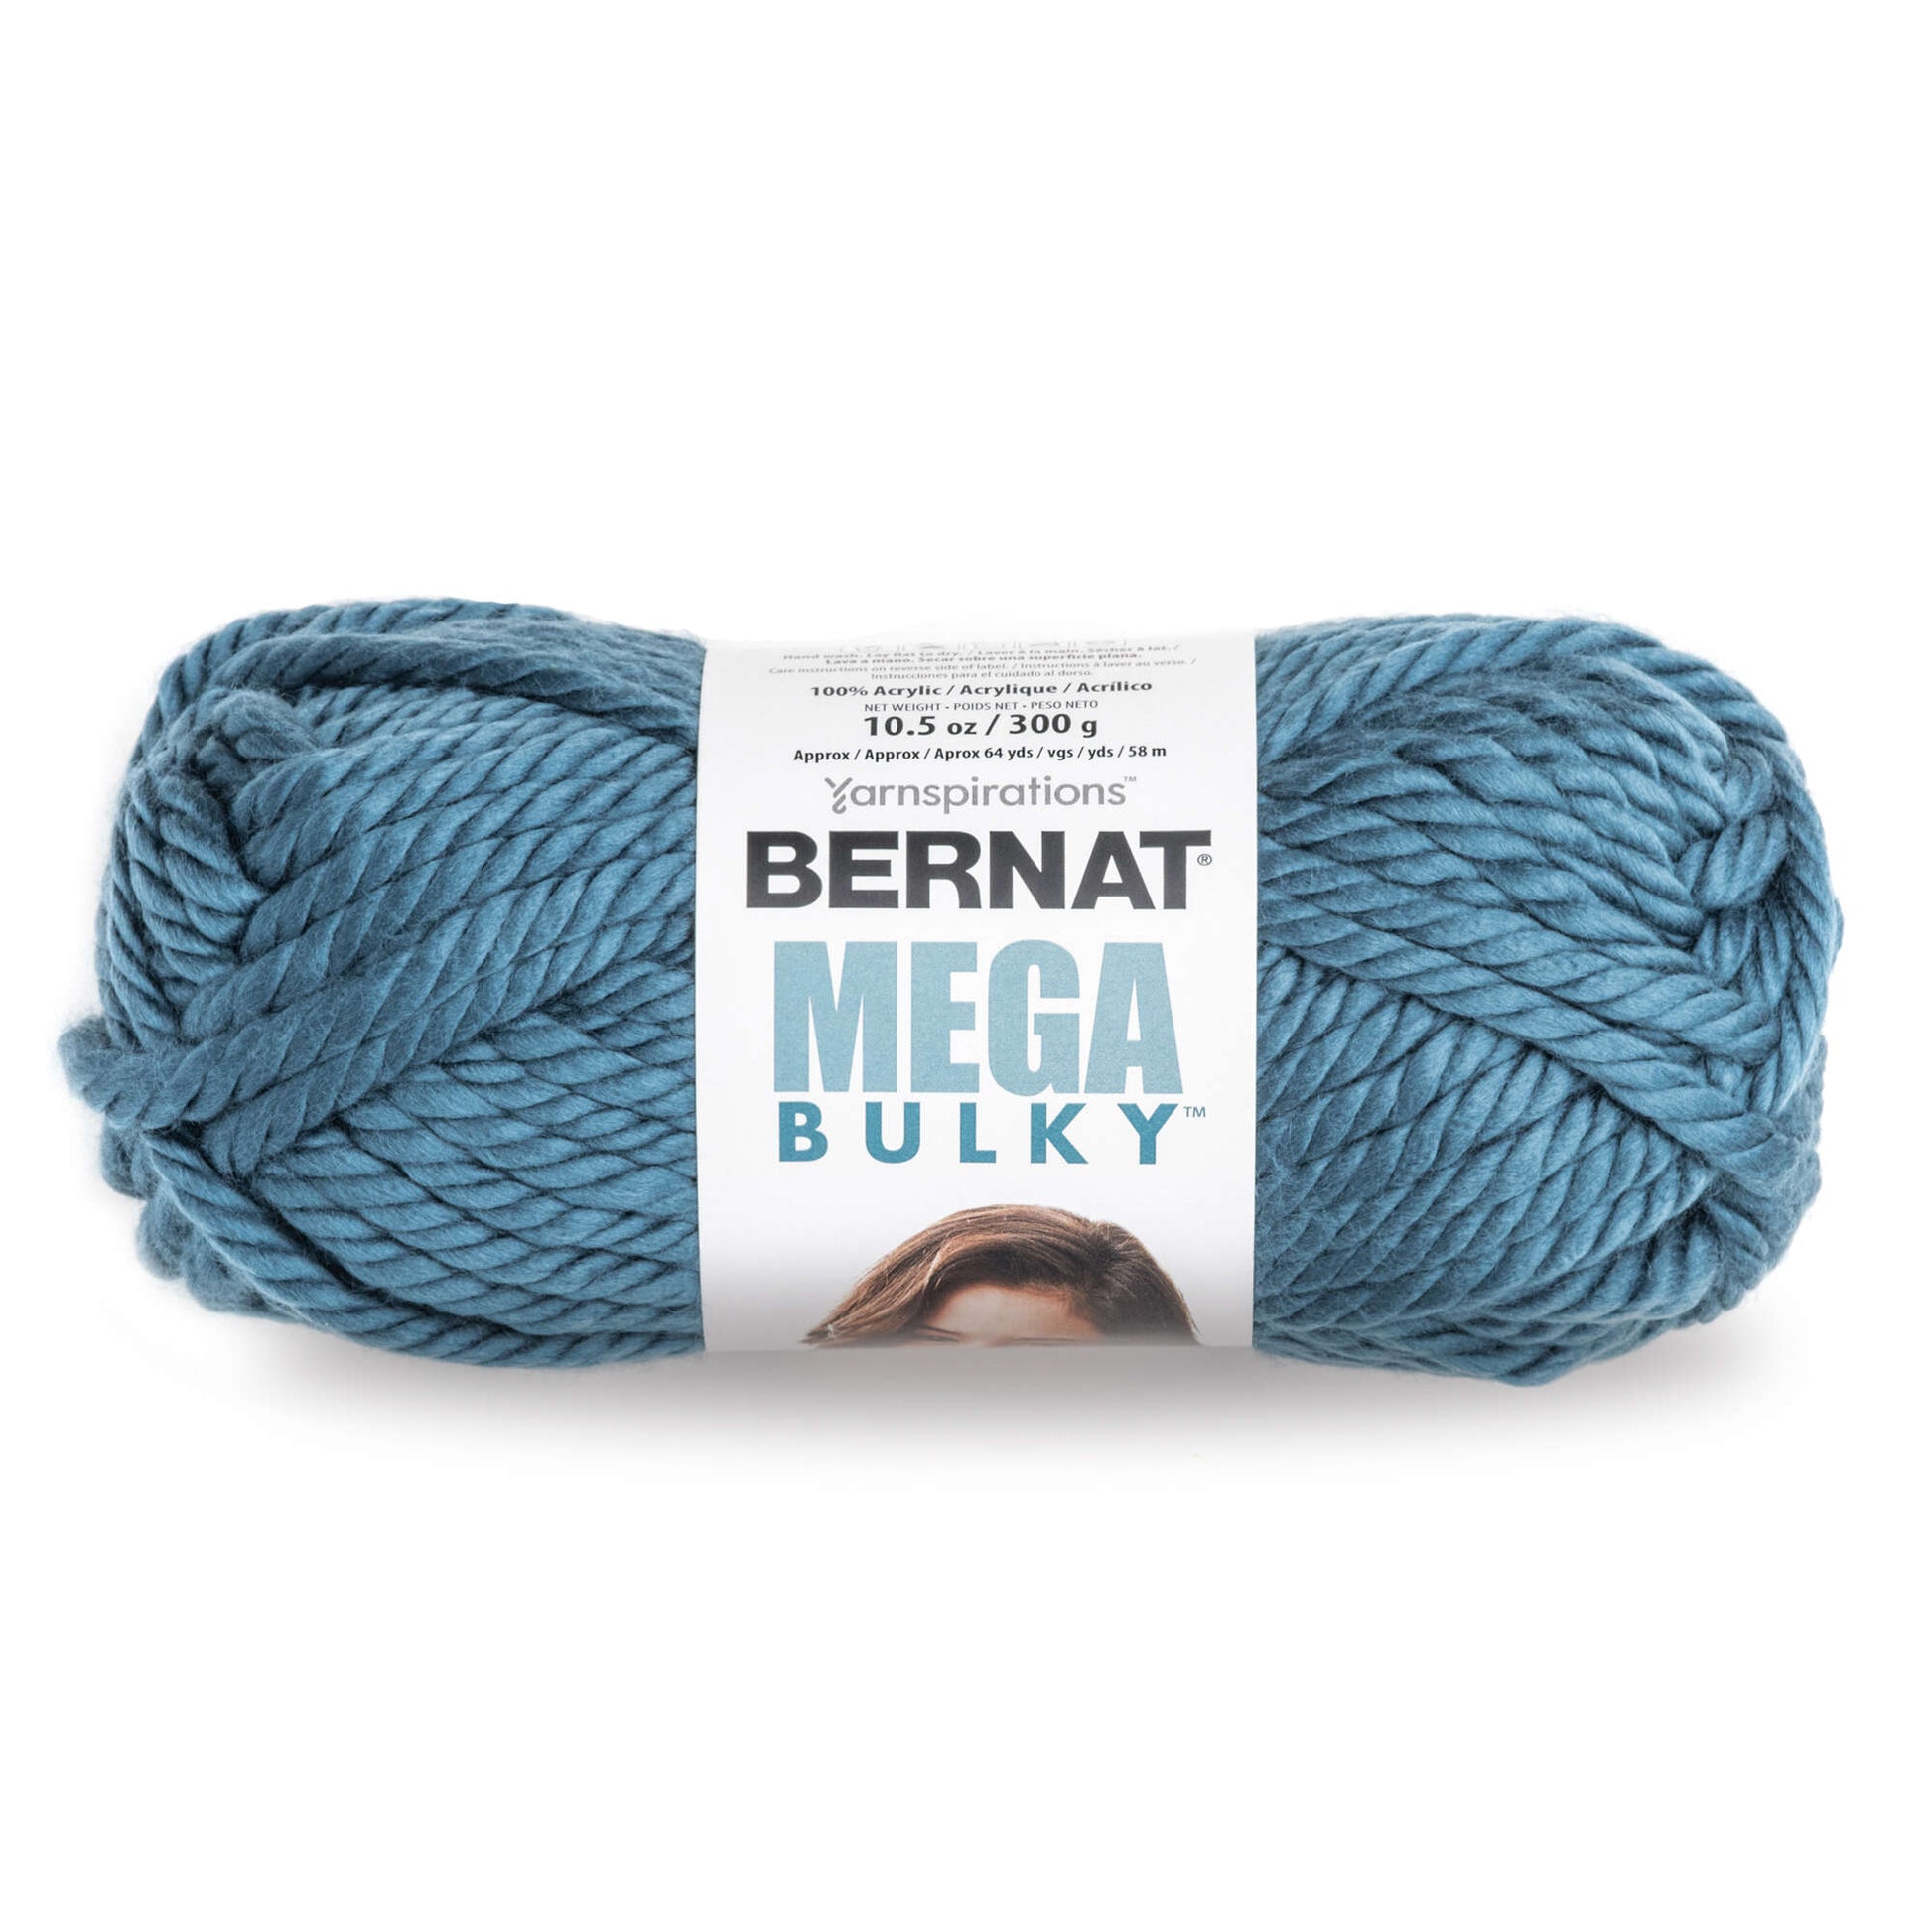  Bernat Mega Bulky Yarn, 10.5 oz, Light Gray Heather, 1 Ball